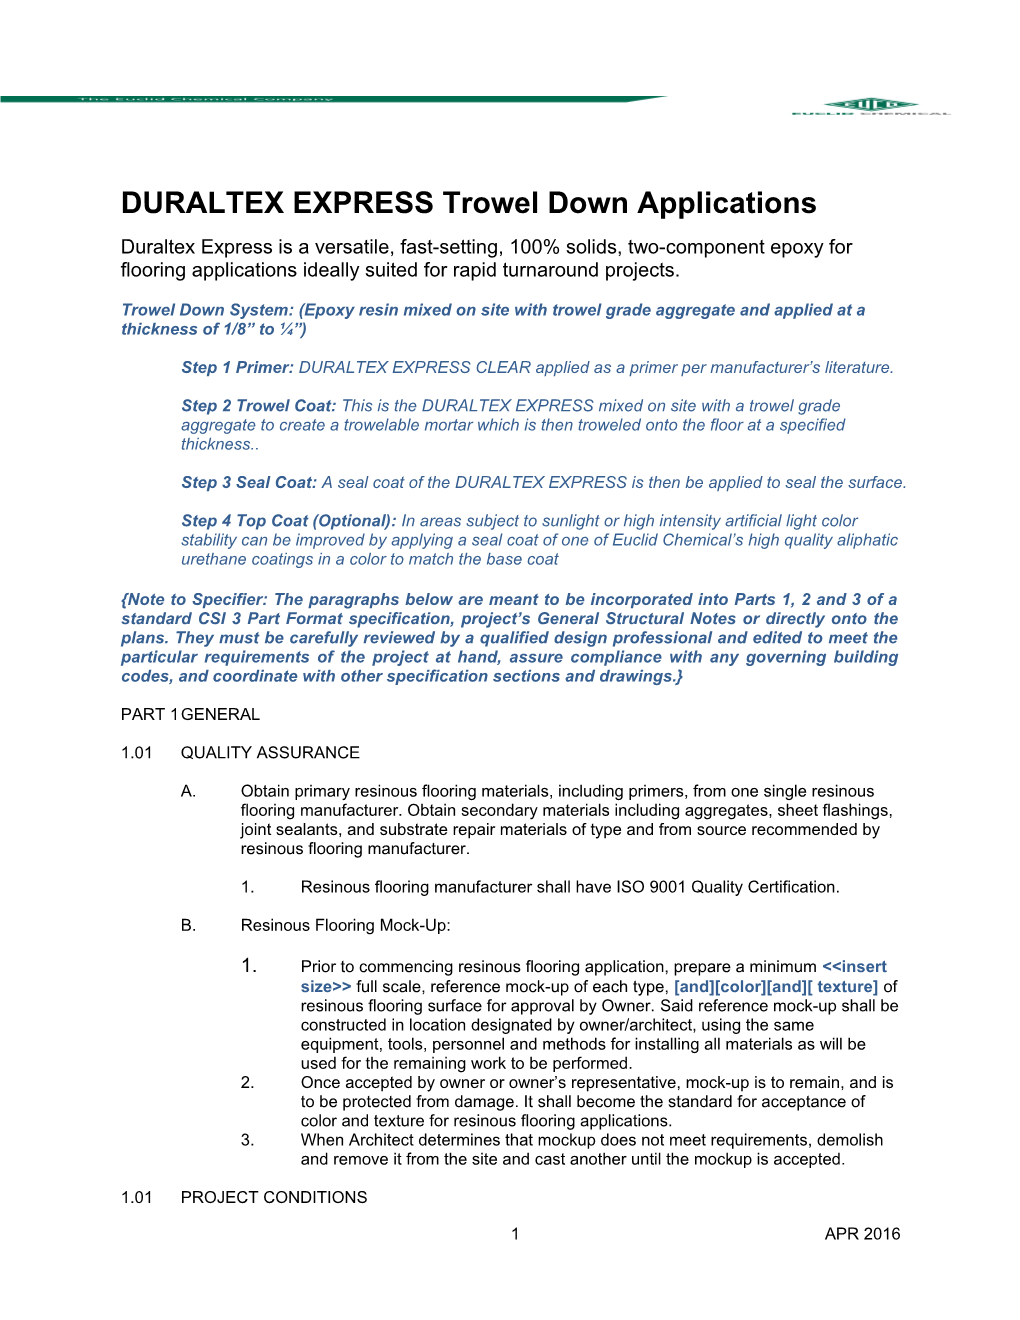 DURALTEX EXPRESS Trowel Down Applications